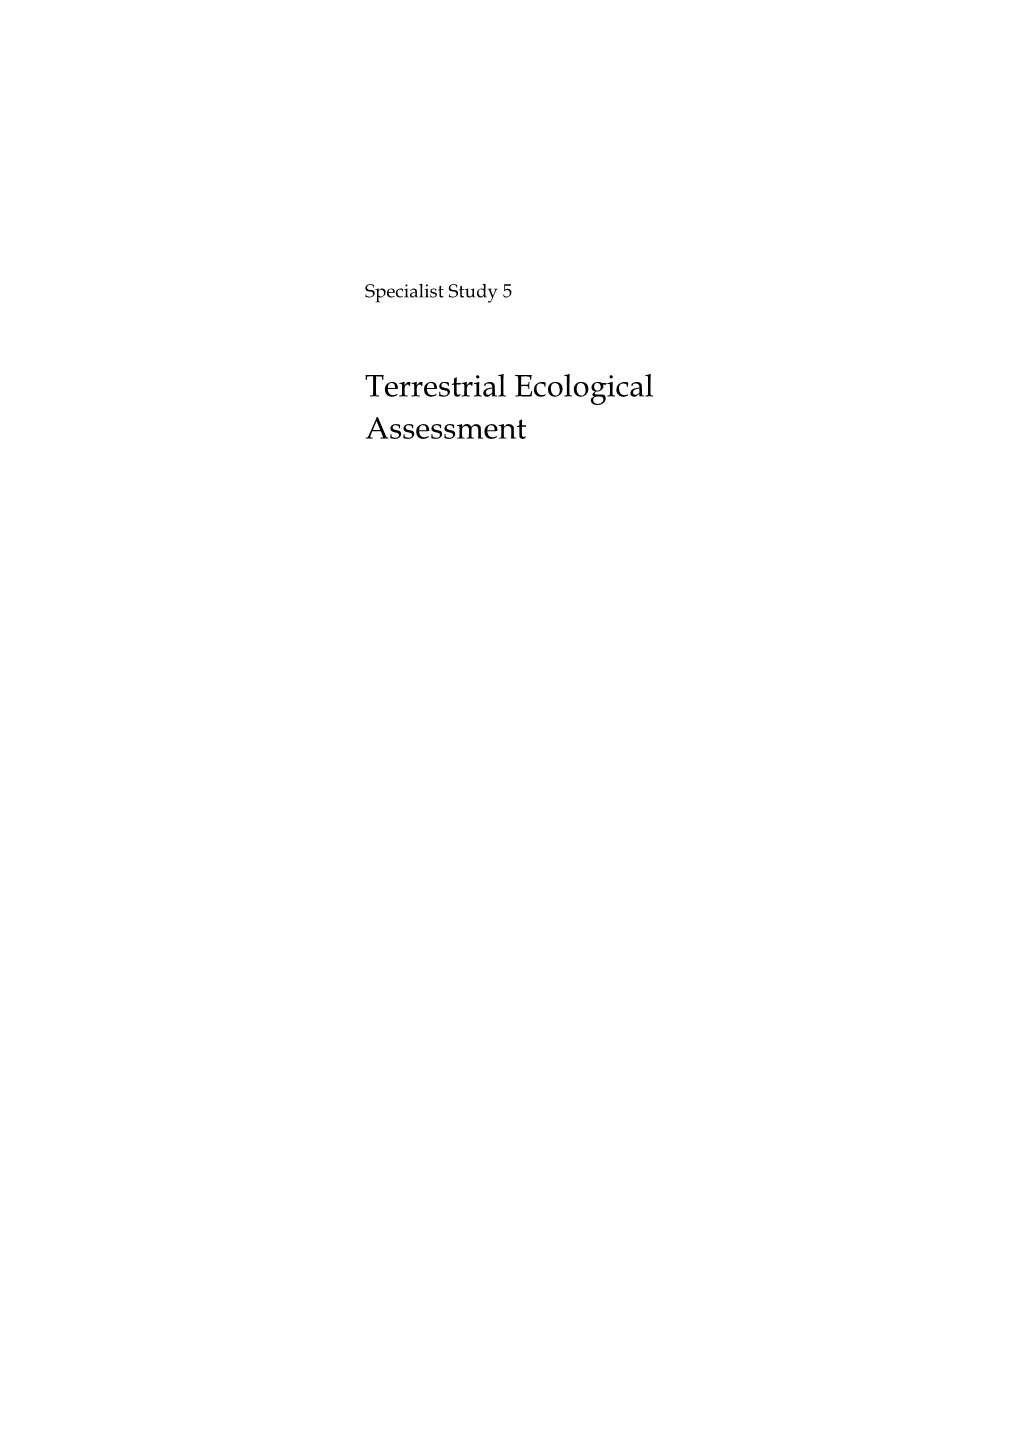 SS 5 Terrestrial Ecology Assessment.Pdf